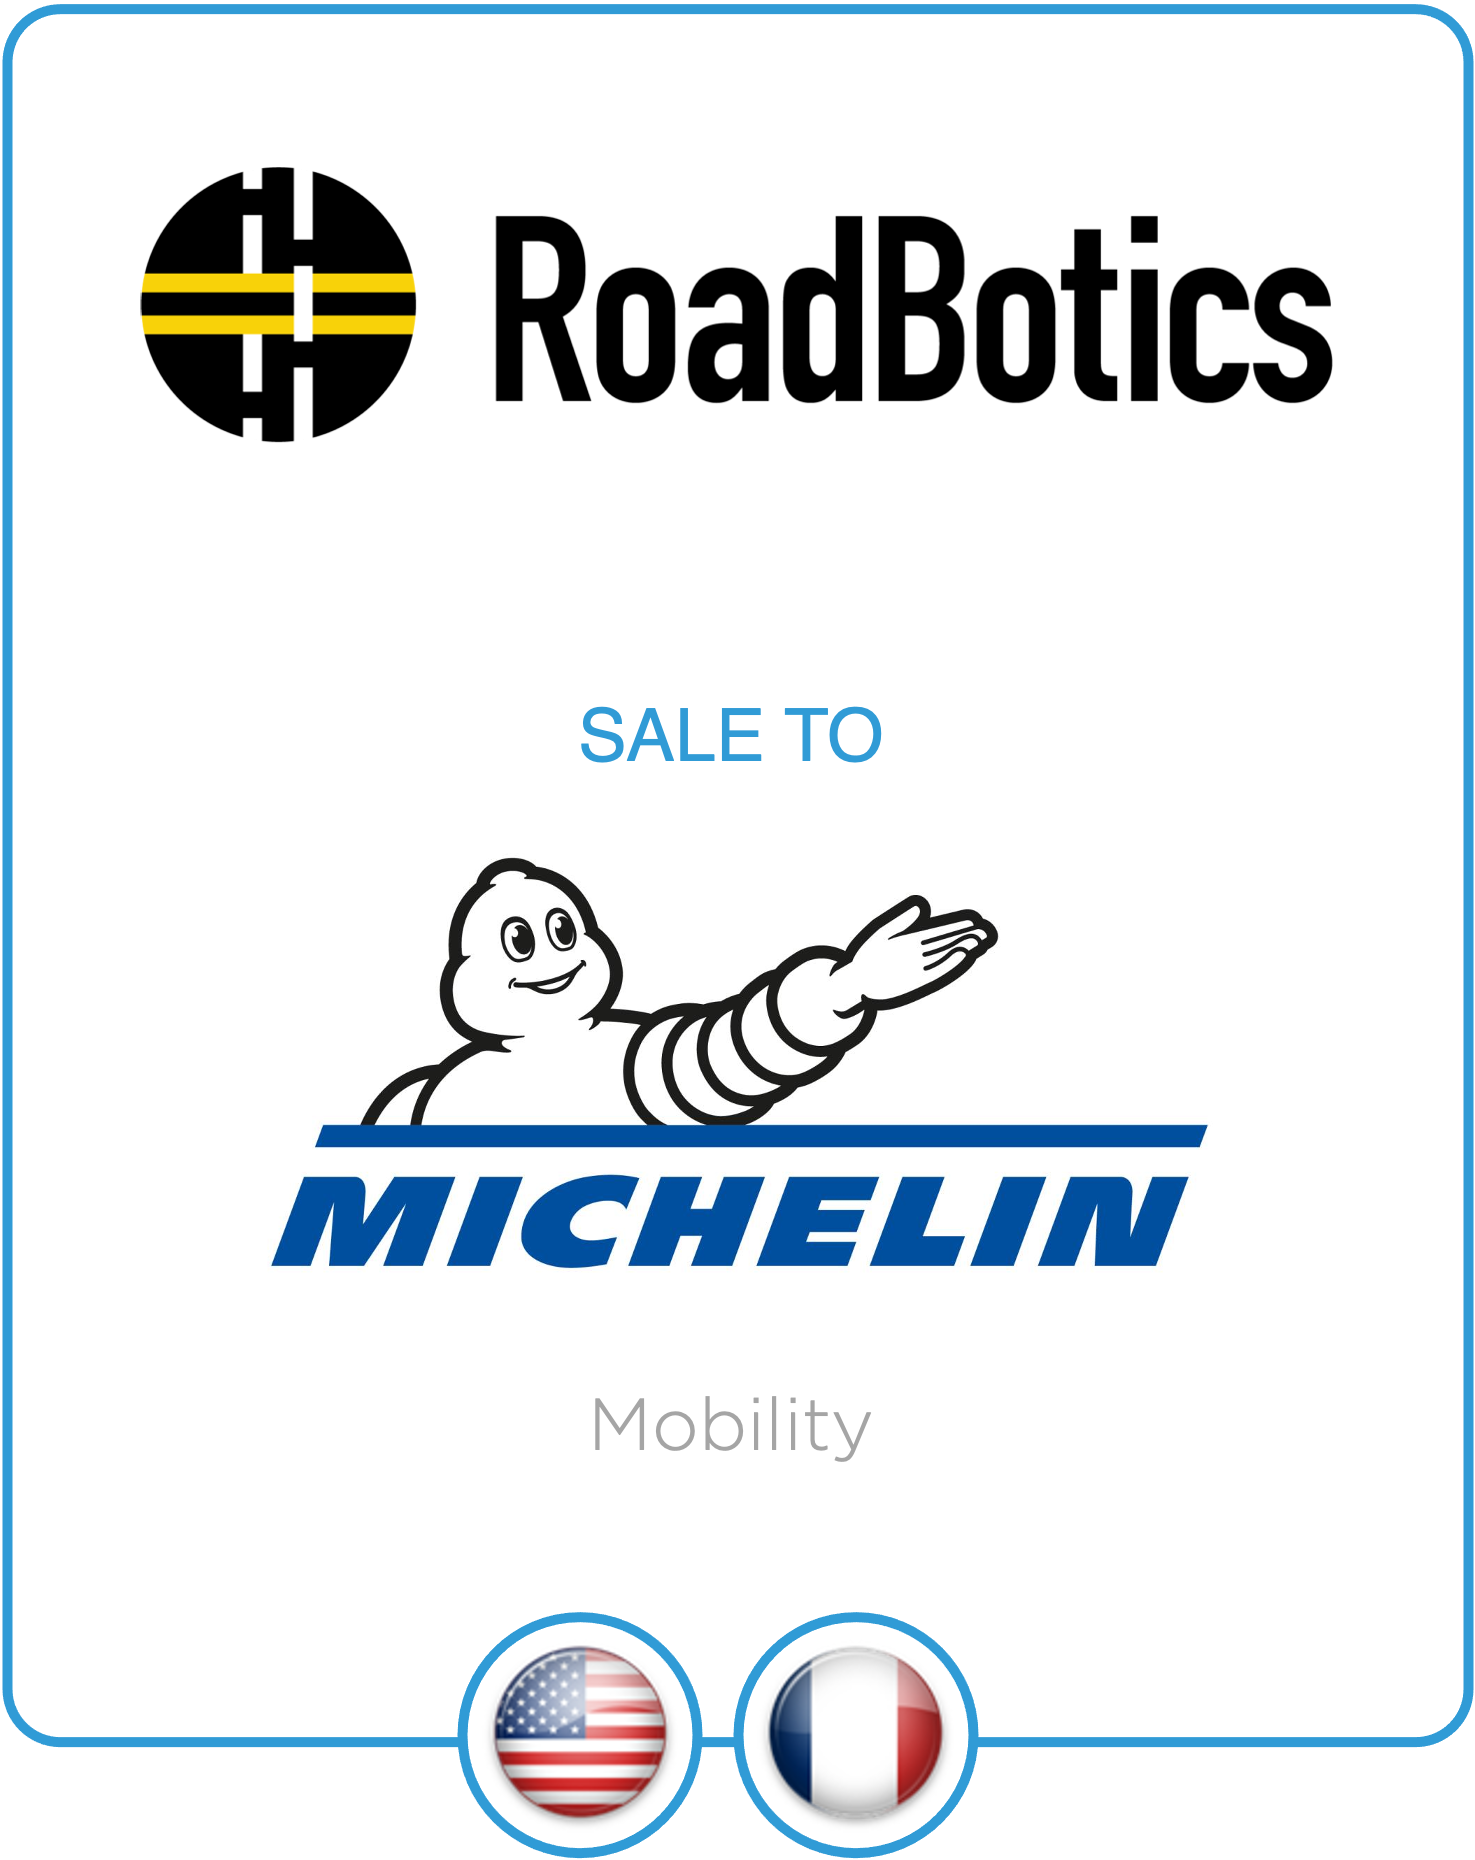 Drake Star Advises RoadBotics on its Sale to Michelin